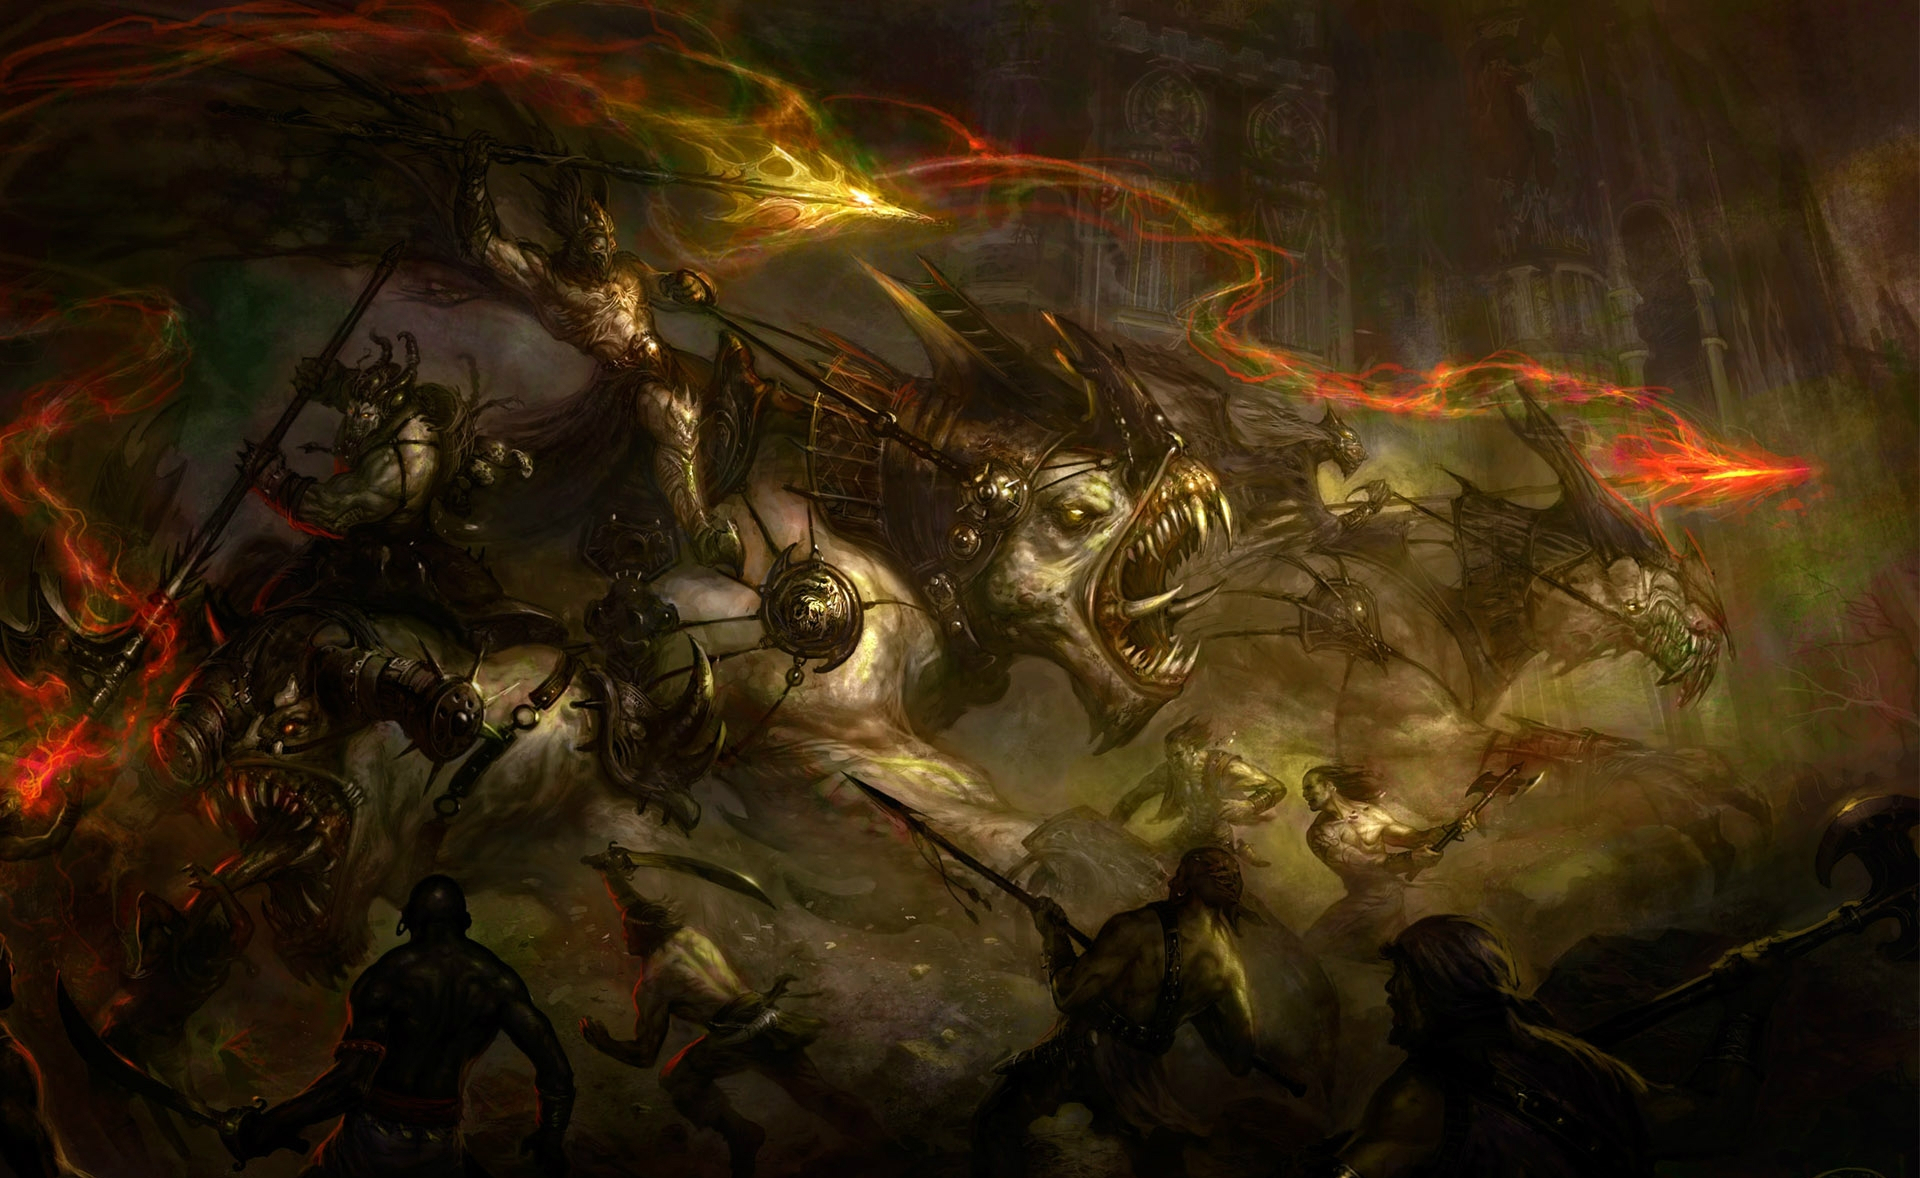 The Art of War - HD Fantasy Battle Scene Wallpapers | Fantasy Inspiration